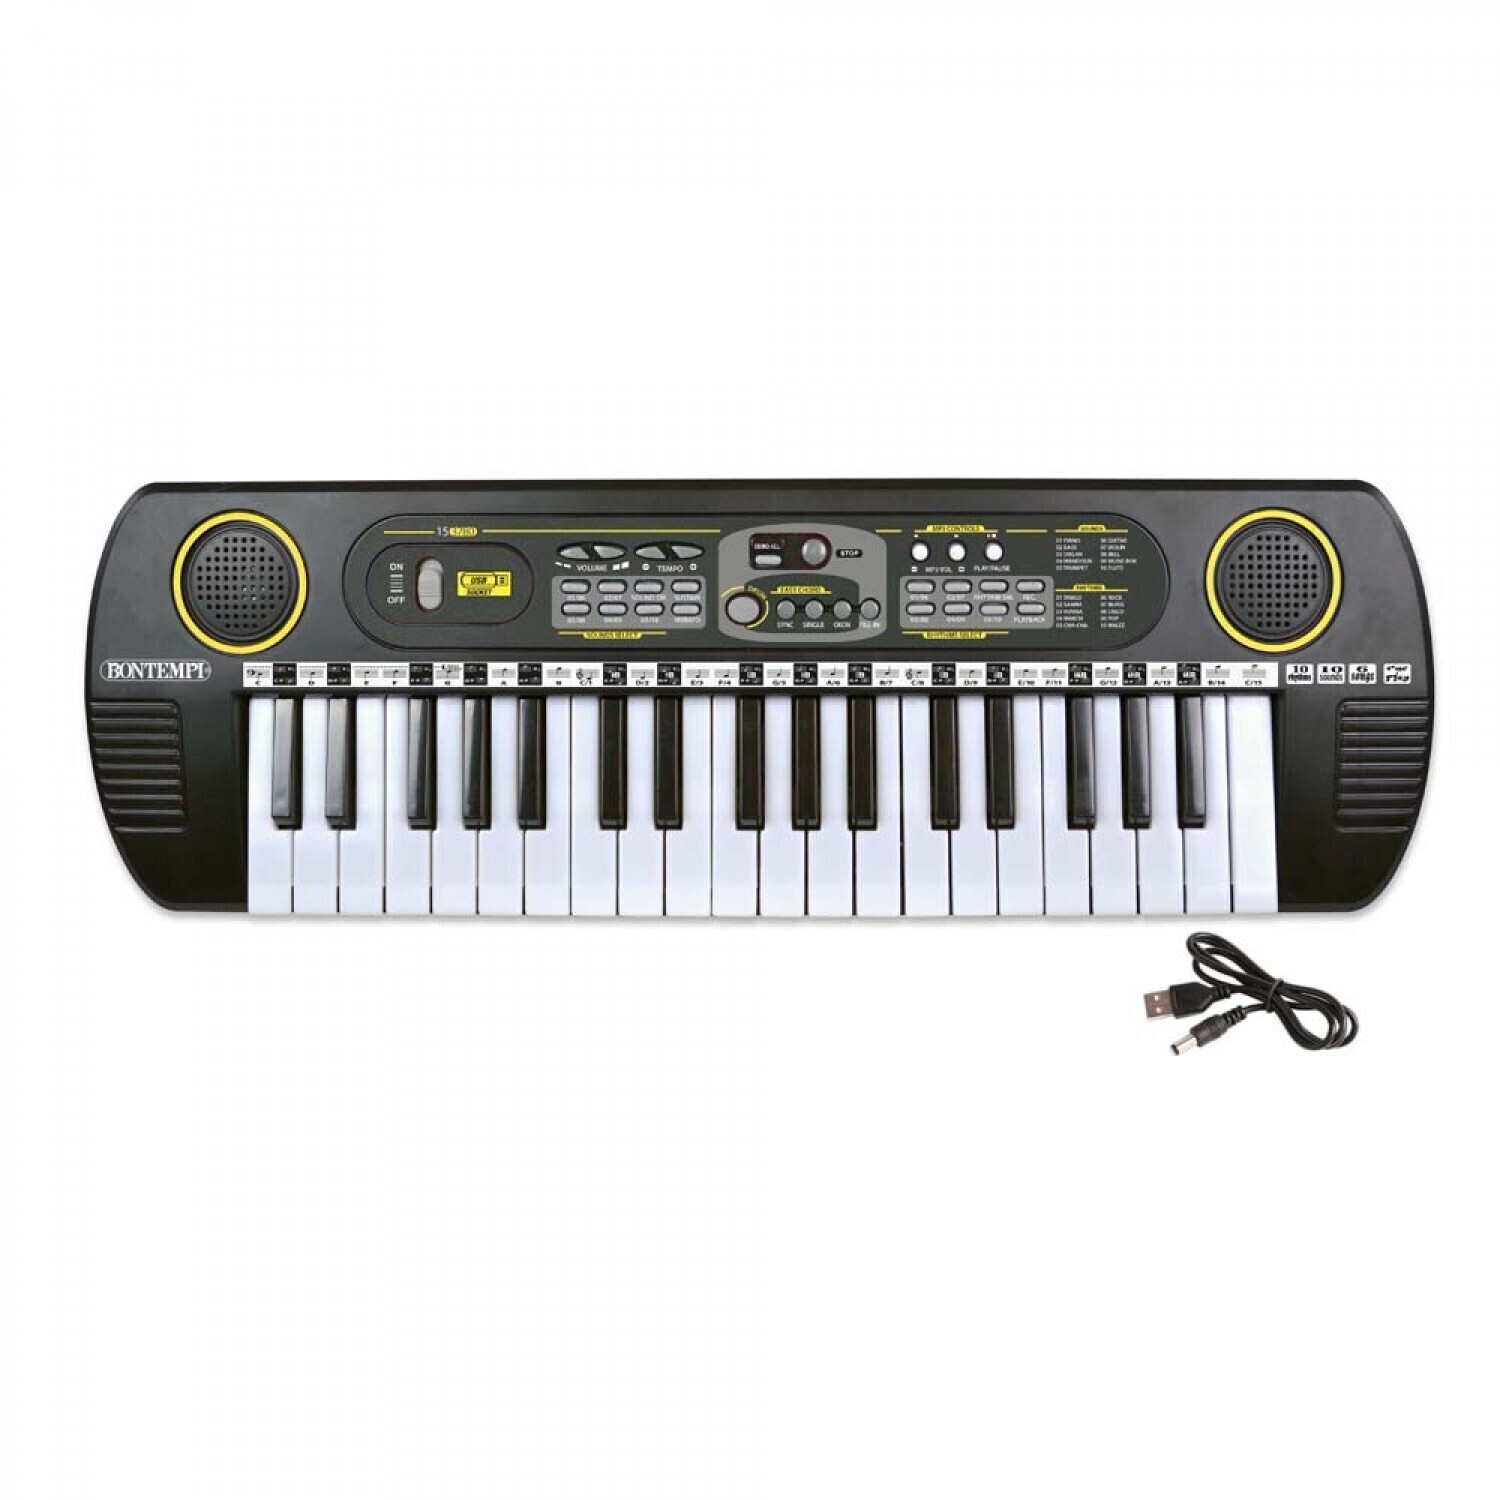 Bontempi Digital keyboard (153780) ab 34,92 Preisvergleich | € bei